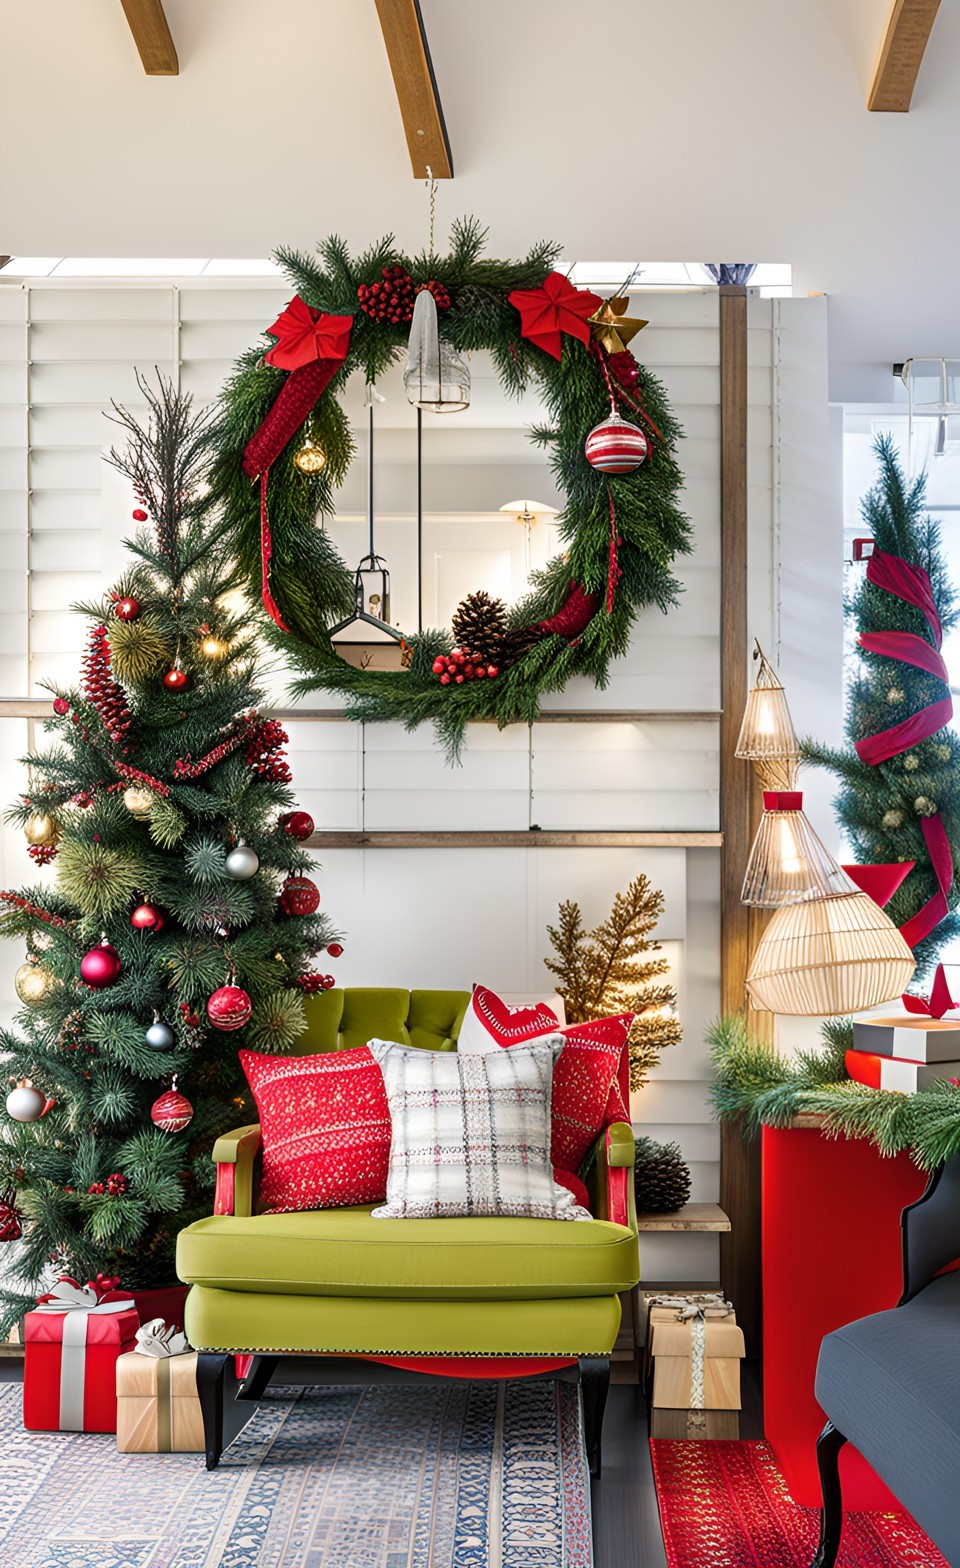 23 Magical Christmas Living Room Decor Ideas to Recreate